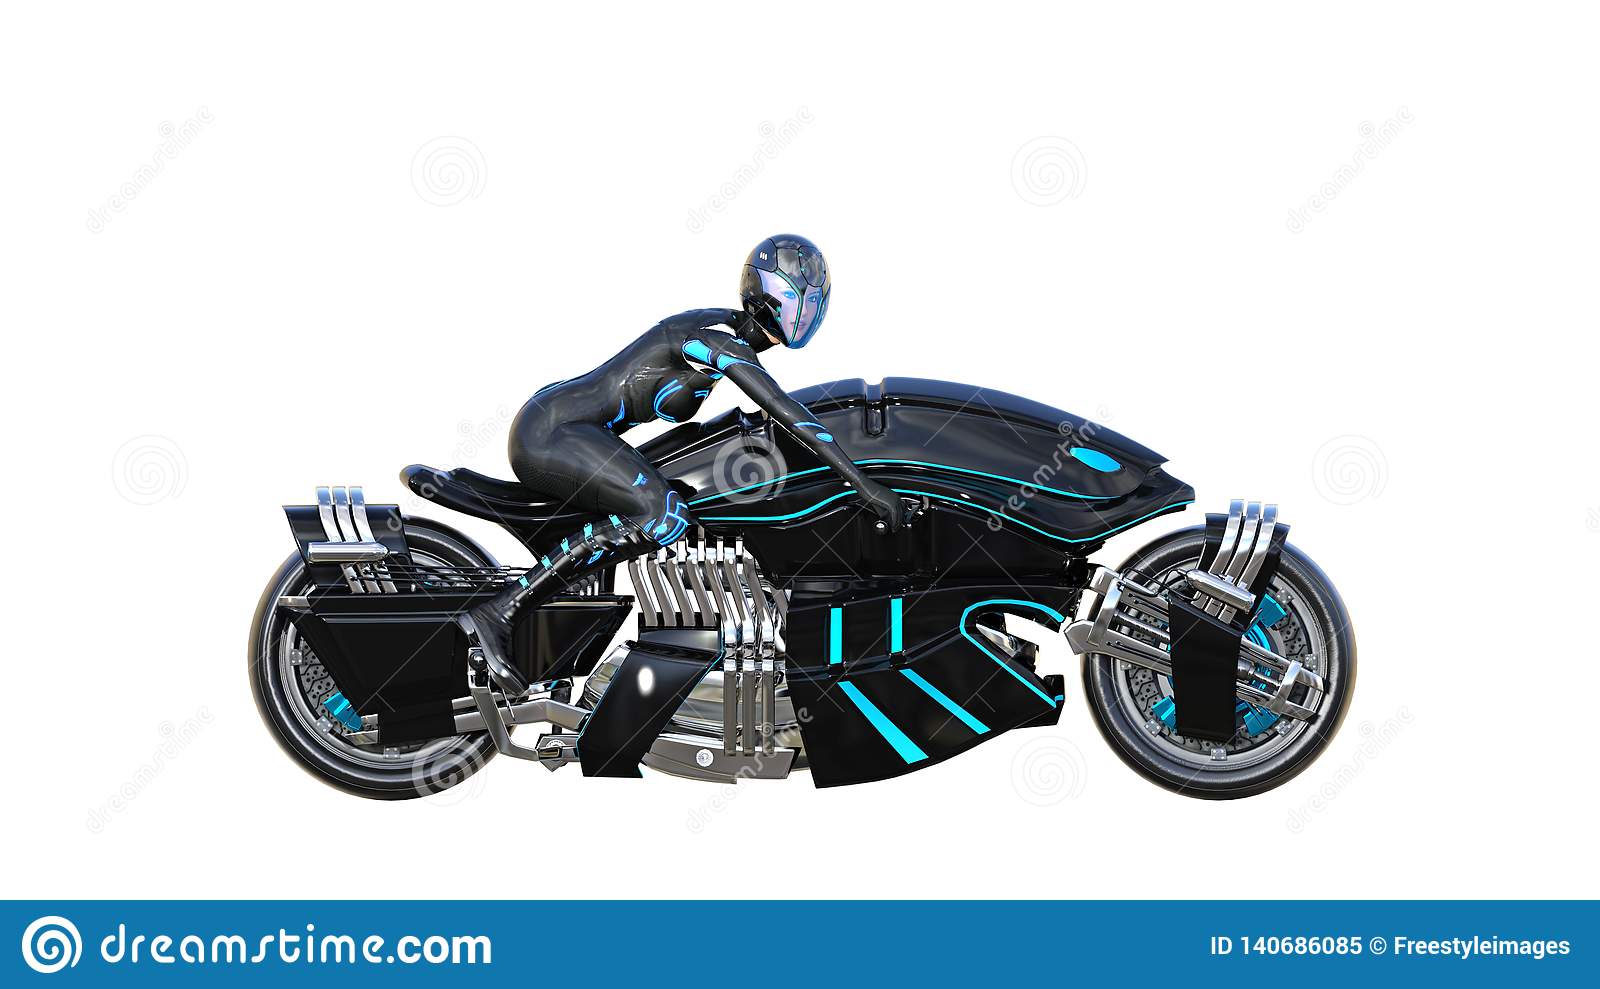 biker-girl-helmet-riding-sci-fi-bike-black-futuristic-motorcycle-isolated-white-background-sid...jpg